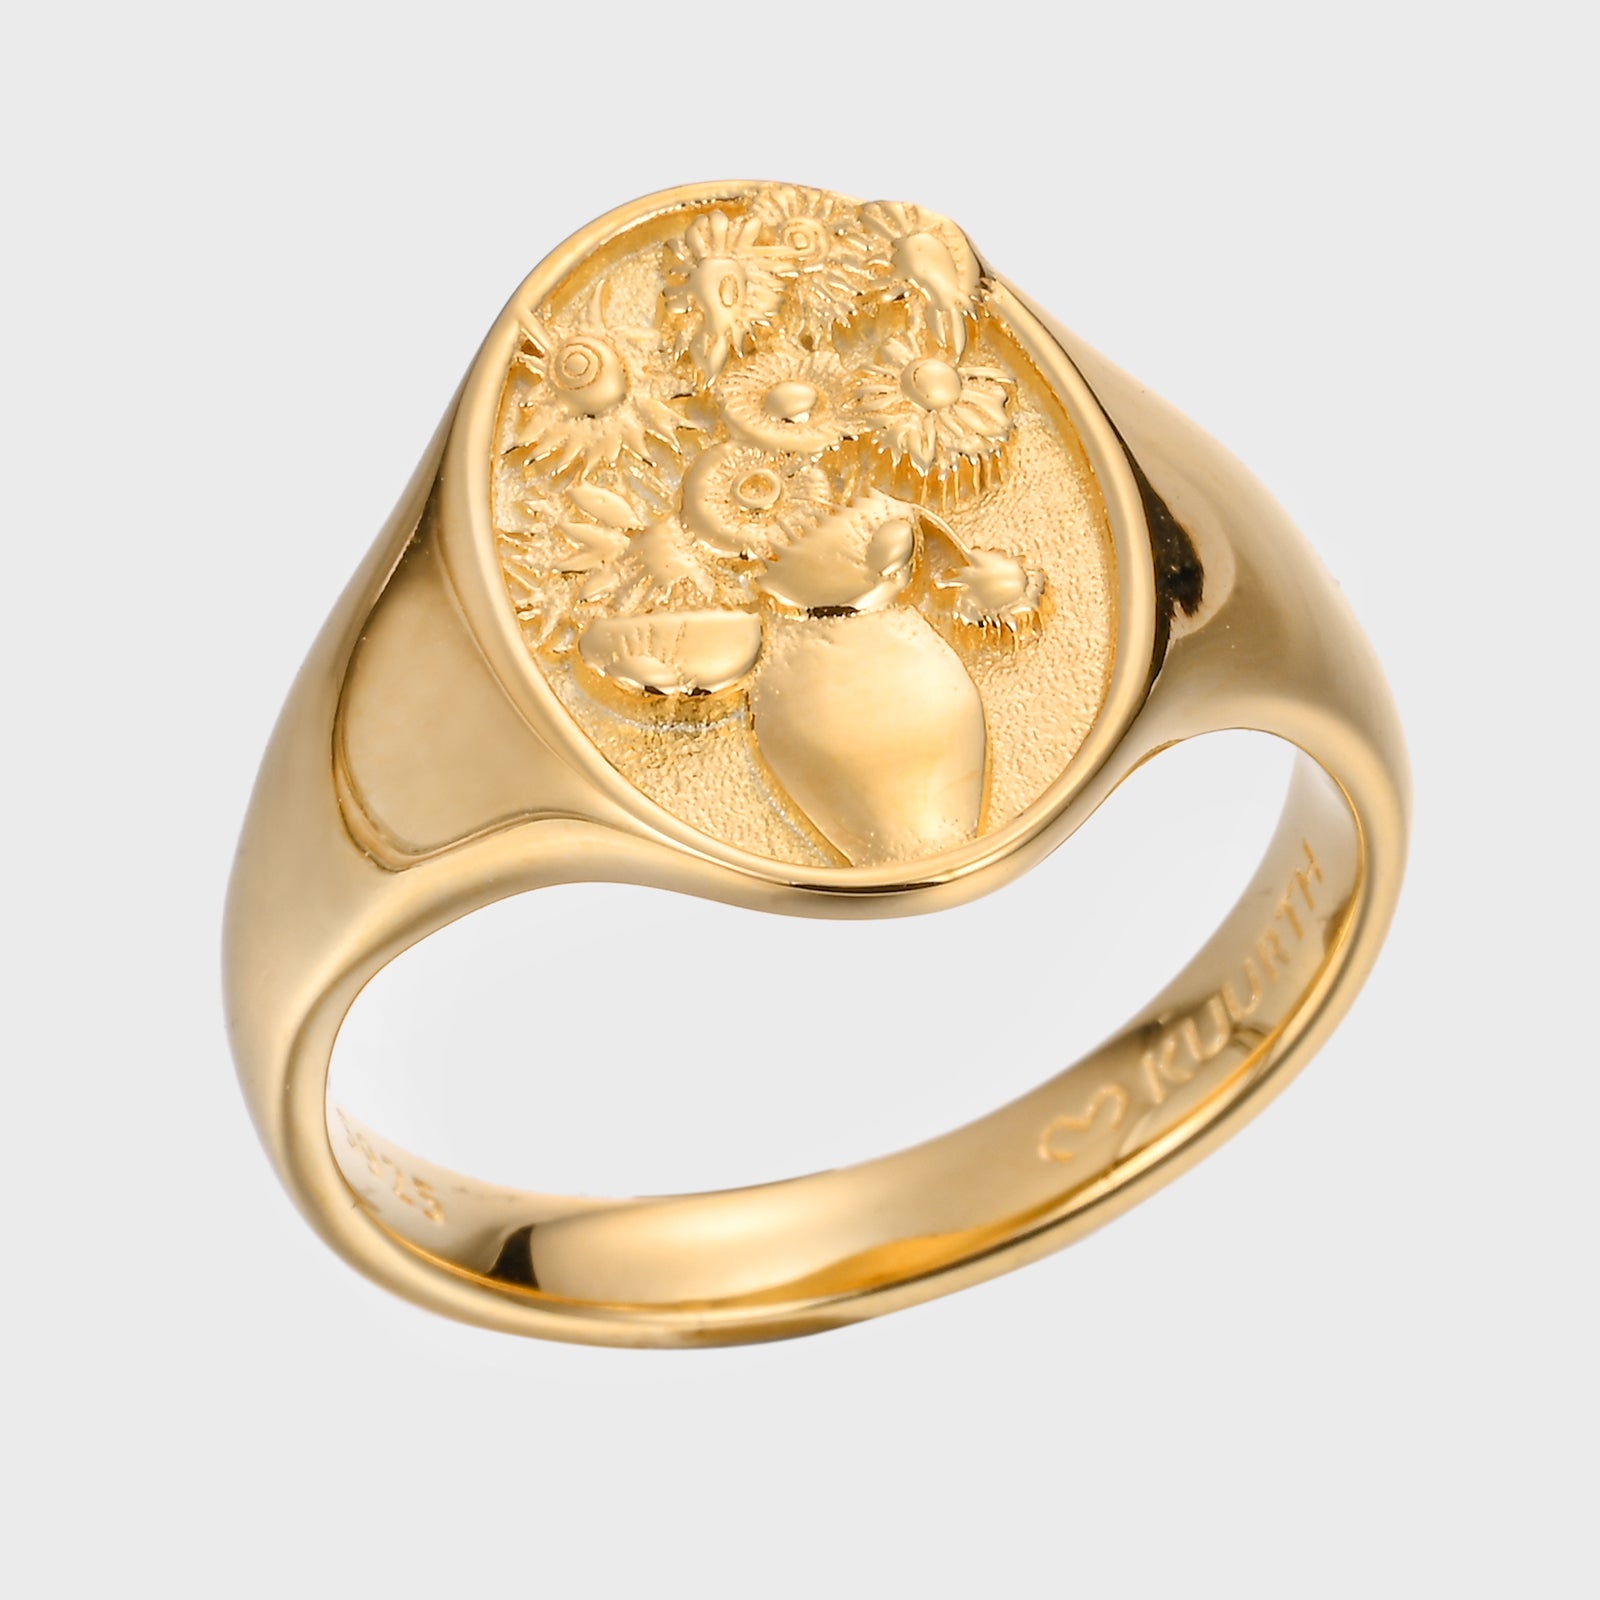 The Arles Sunflowers - Gold Seal Ring V2